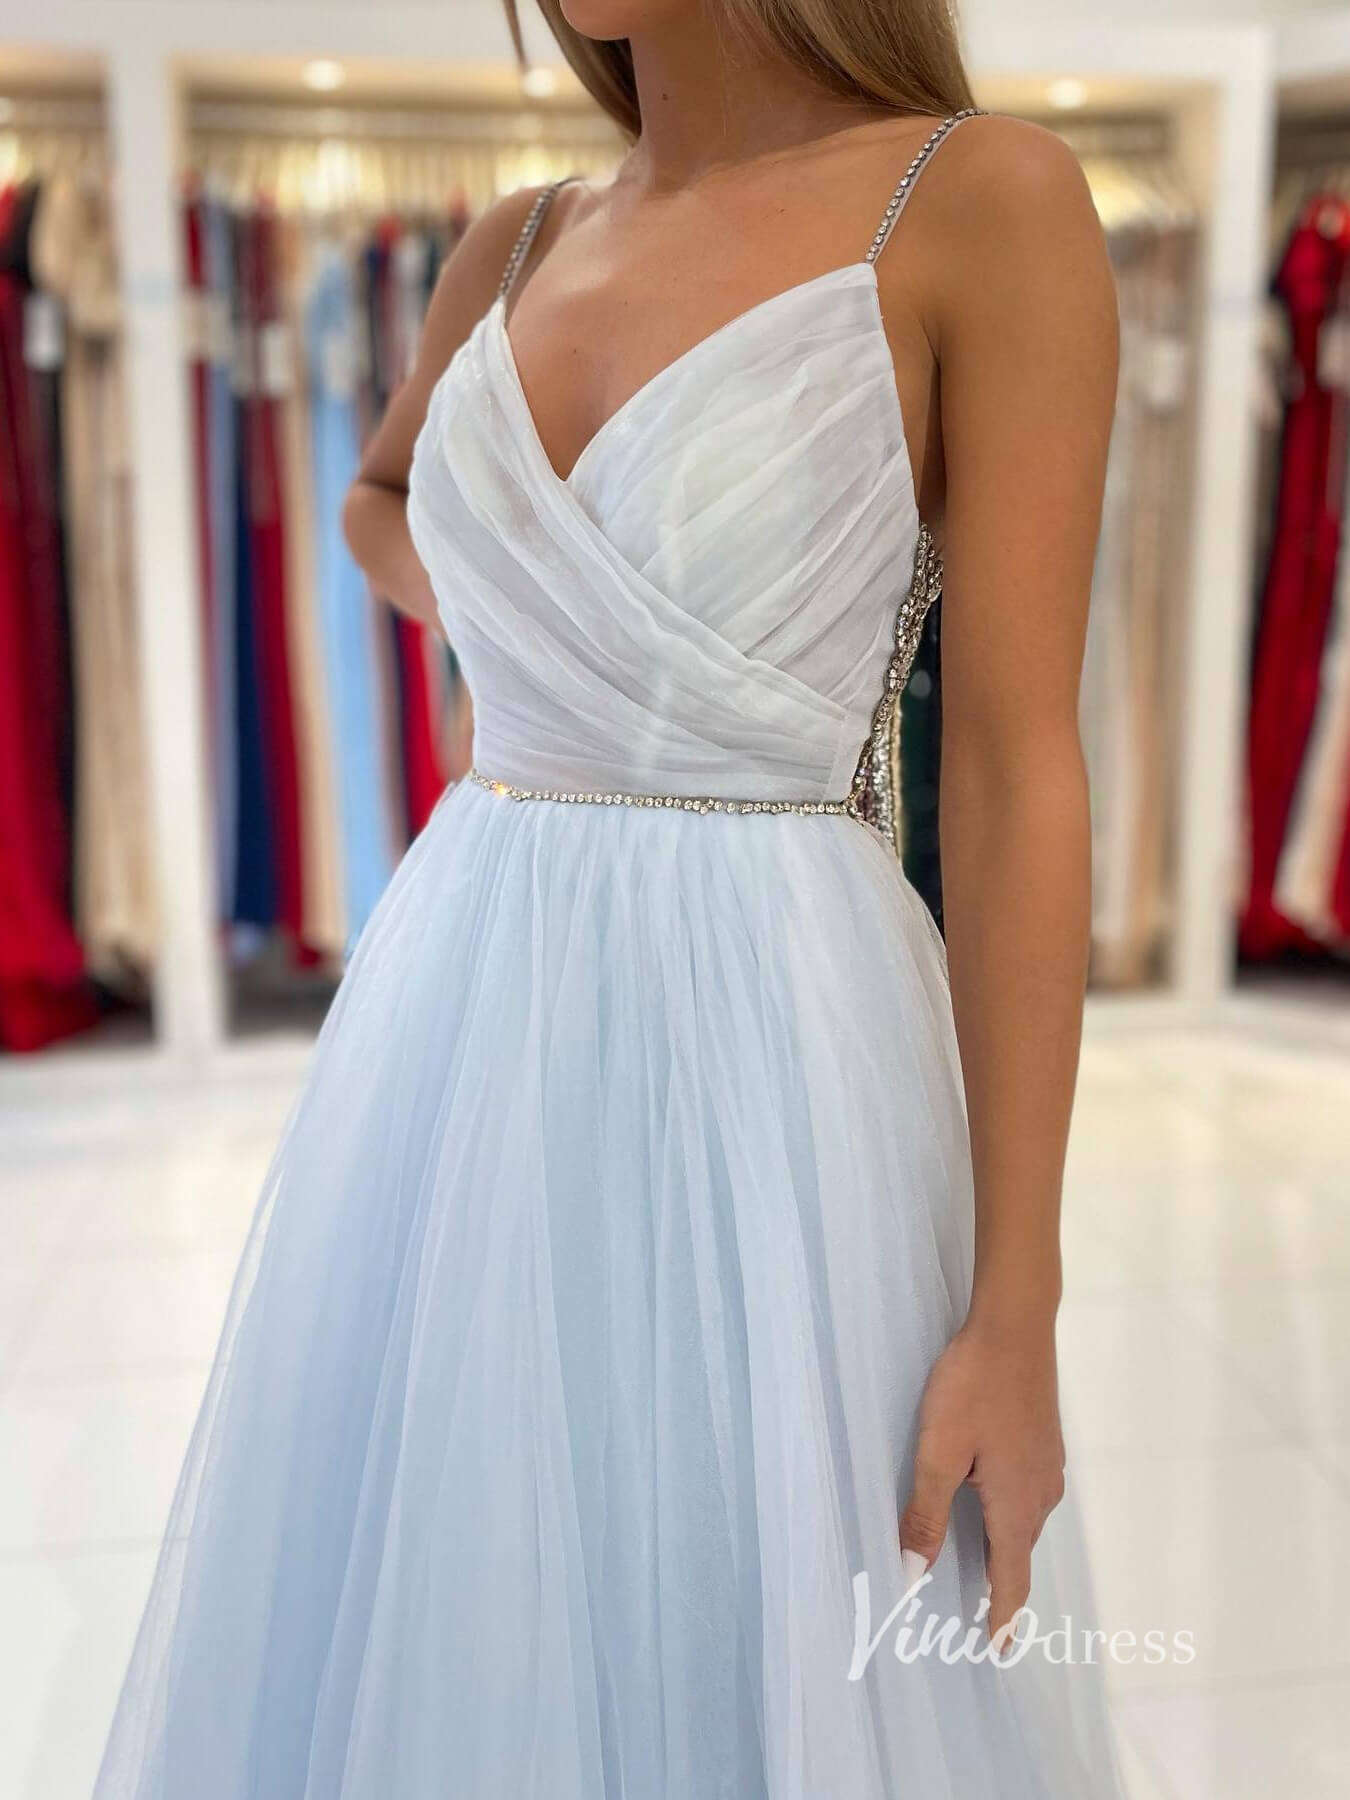 Light Blue Tulle Prom Dresses Spaghetti Strap Evening Dress FD2913-prom dresses-Viniodress-Viniodress